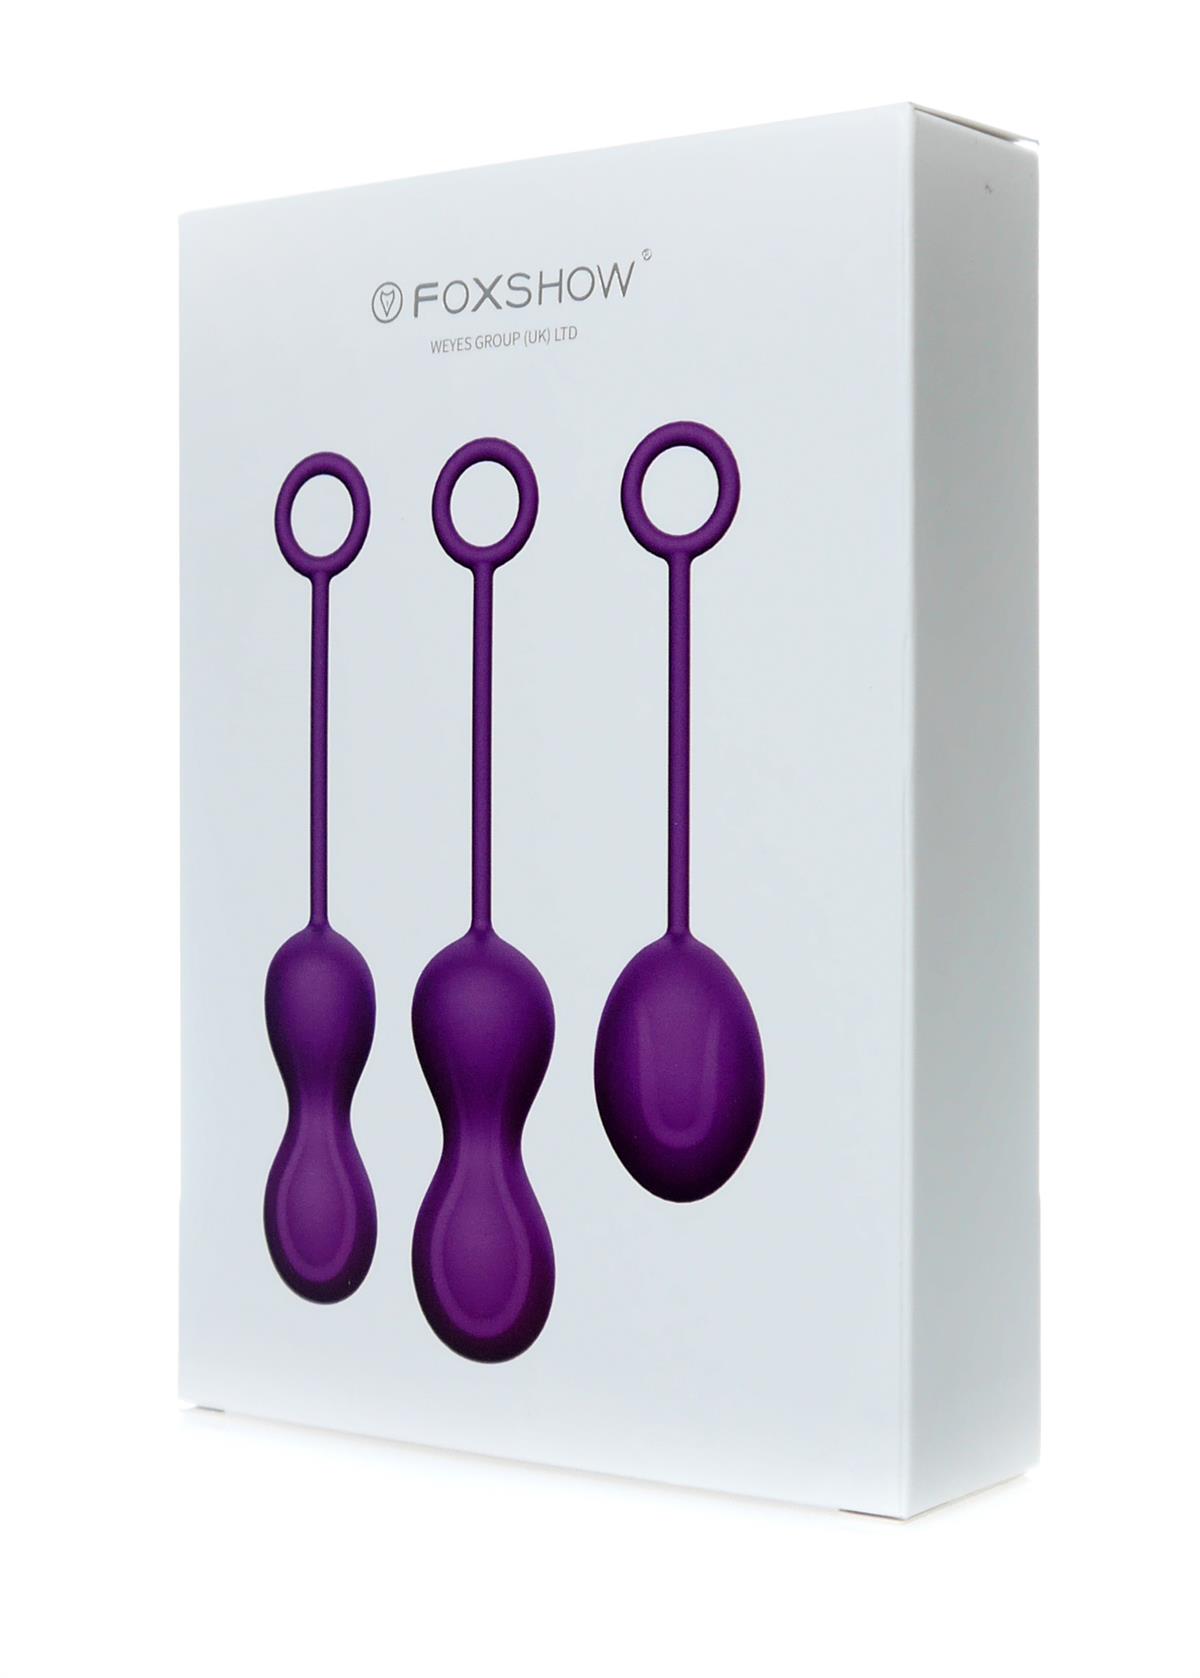 Foxshow - 63-00044 - Kegel ball 3 Pack set - 7,9 cm / 7,4 cm / 4,7 cm - Luxury Giftbox - Purple  - Geisha ball set